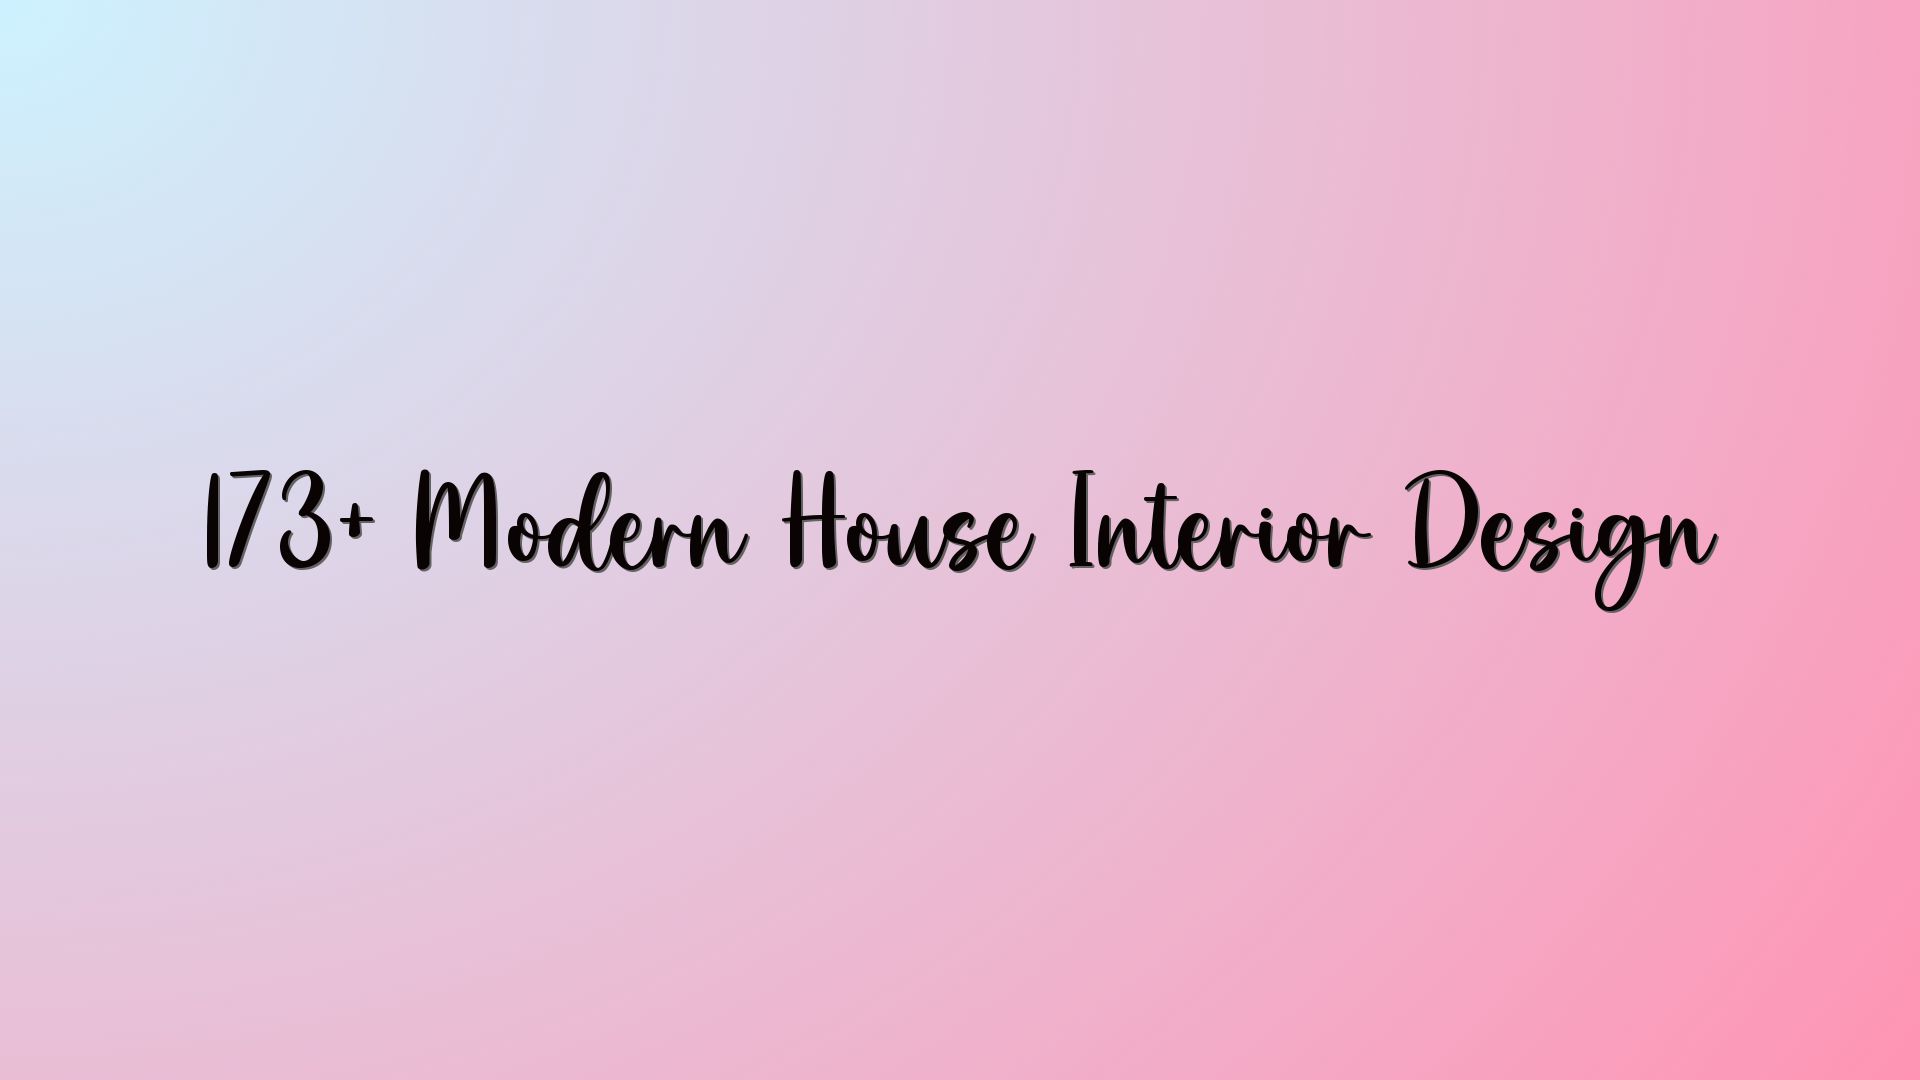 173+ Modern House Interior Design